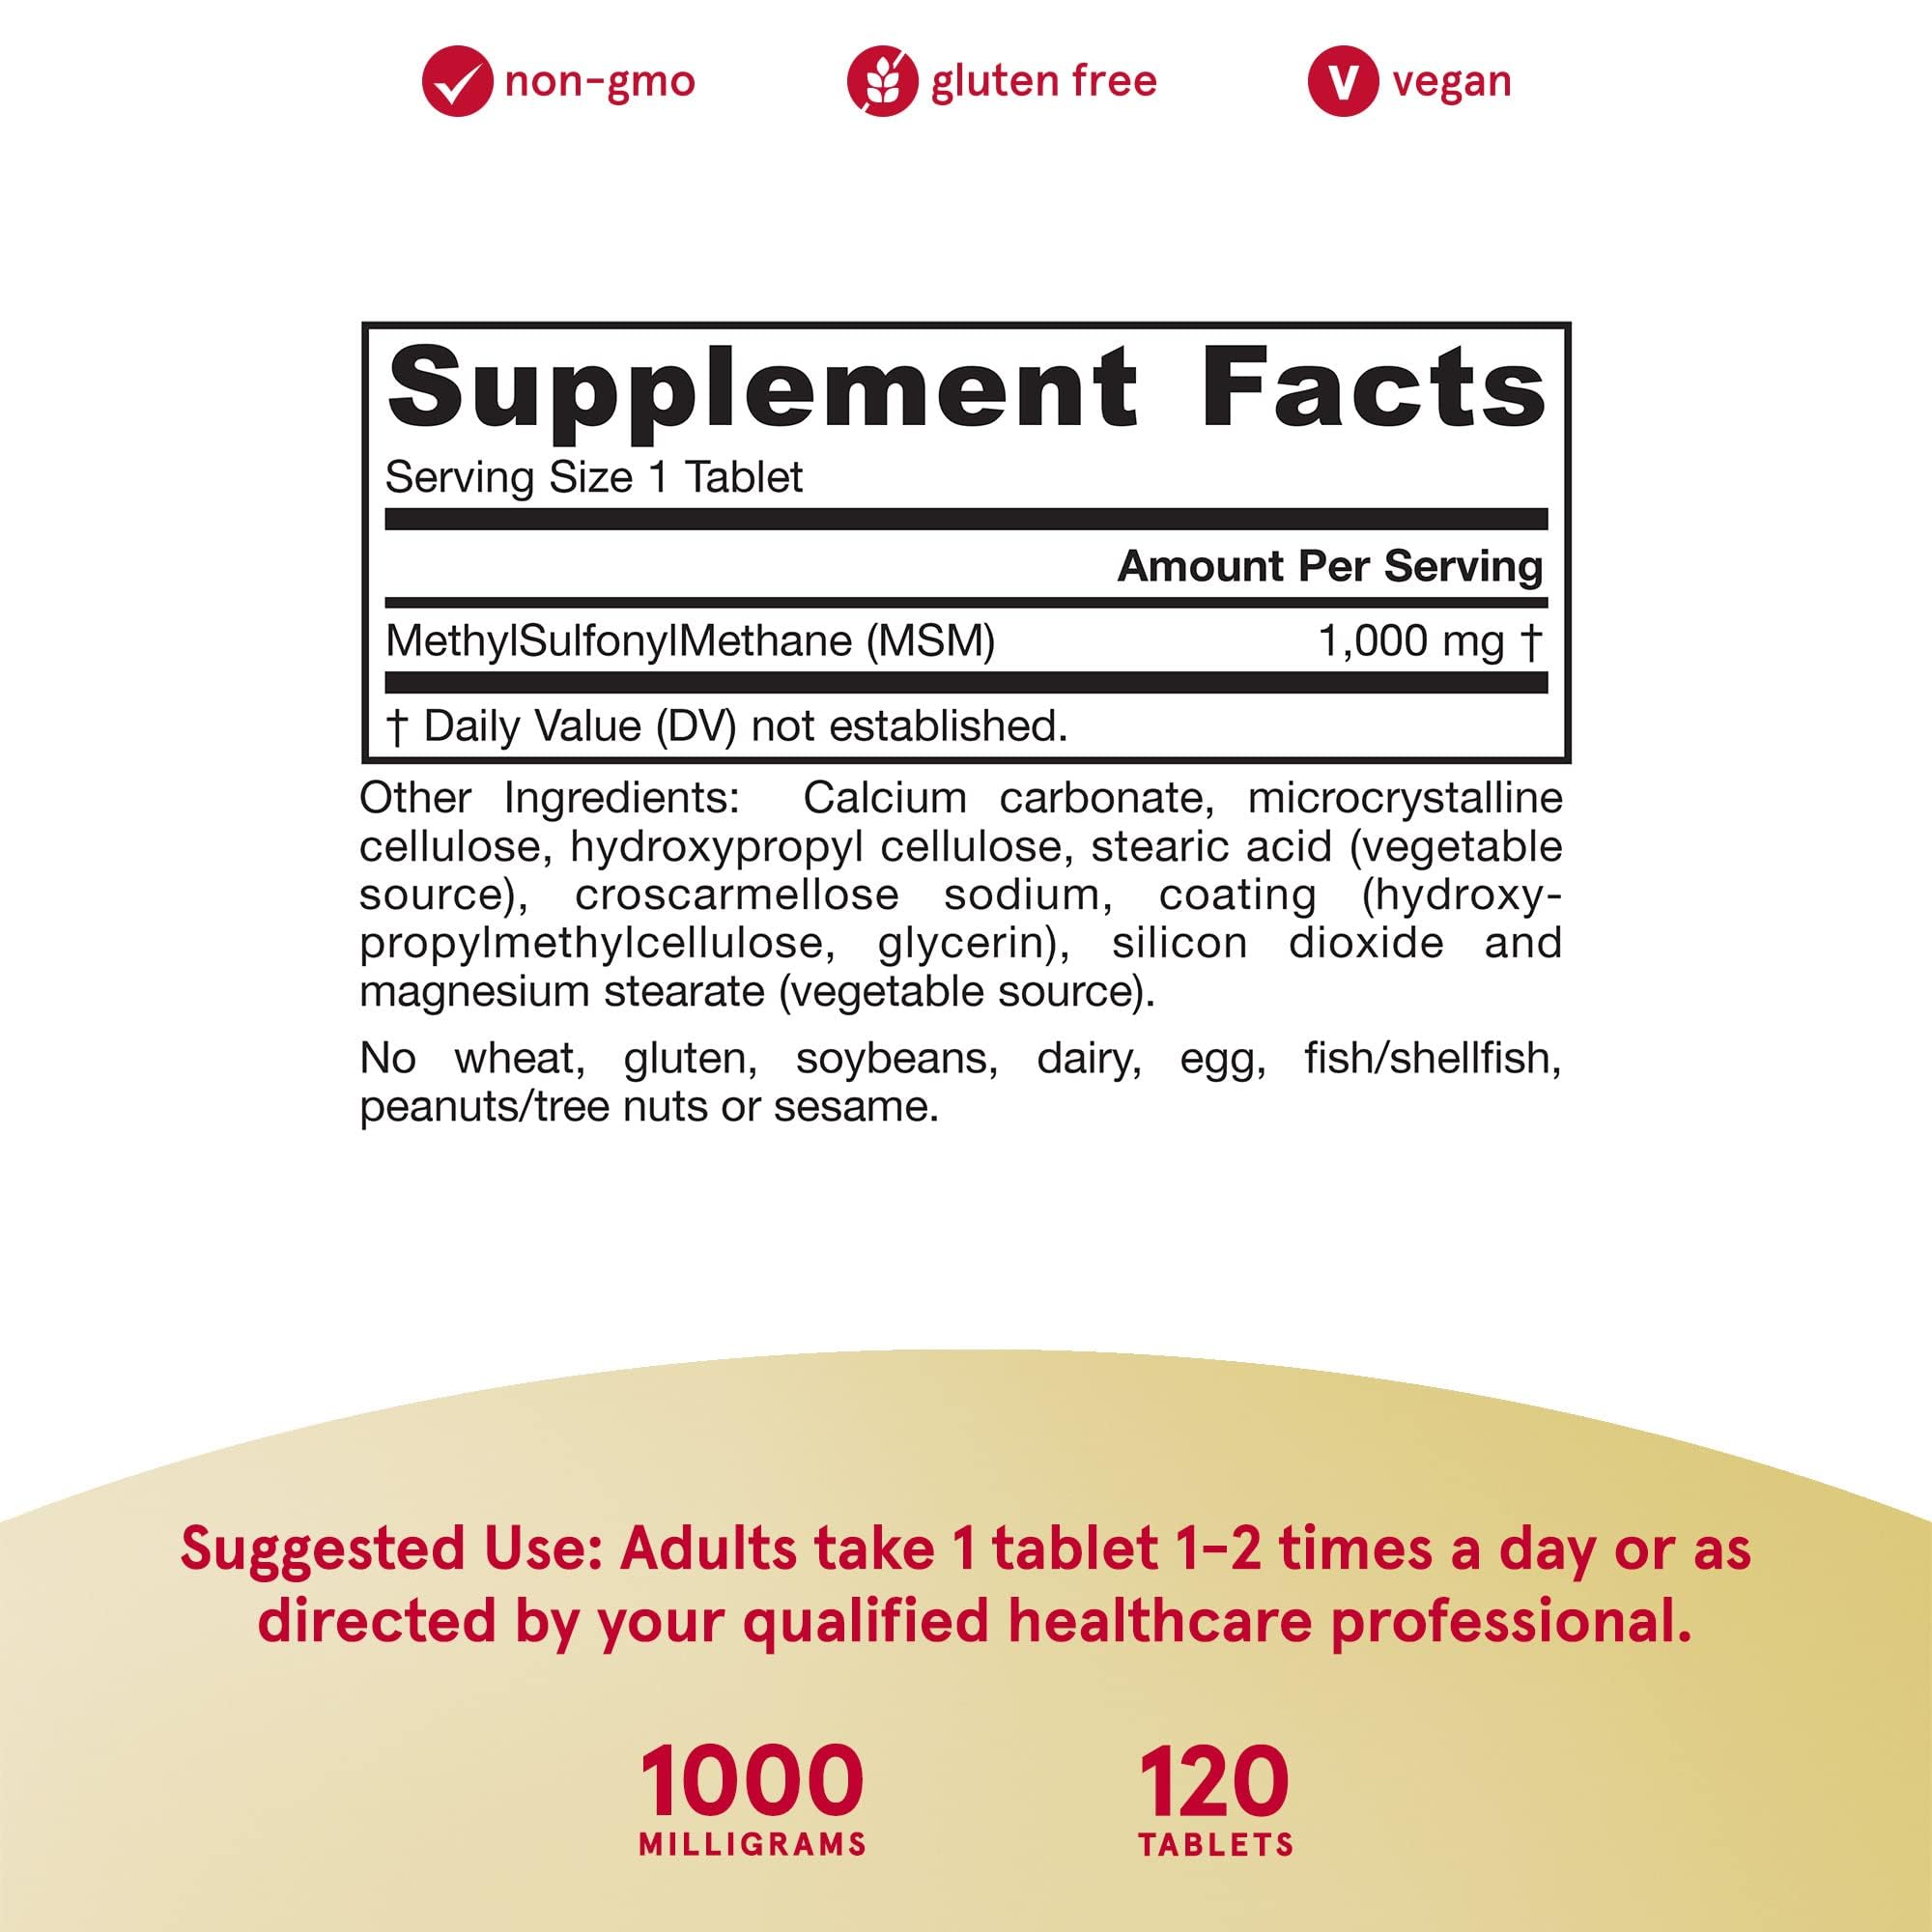 Jarrow Formulas MSM 1000 mg - 120 Tablets - Methylsulfonylmethane - Important Source of Organic Sulfur - Joint Health - Up to 120 Servings